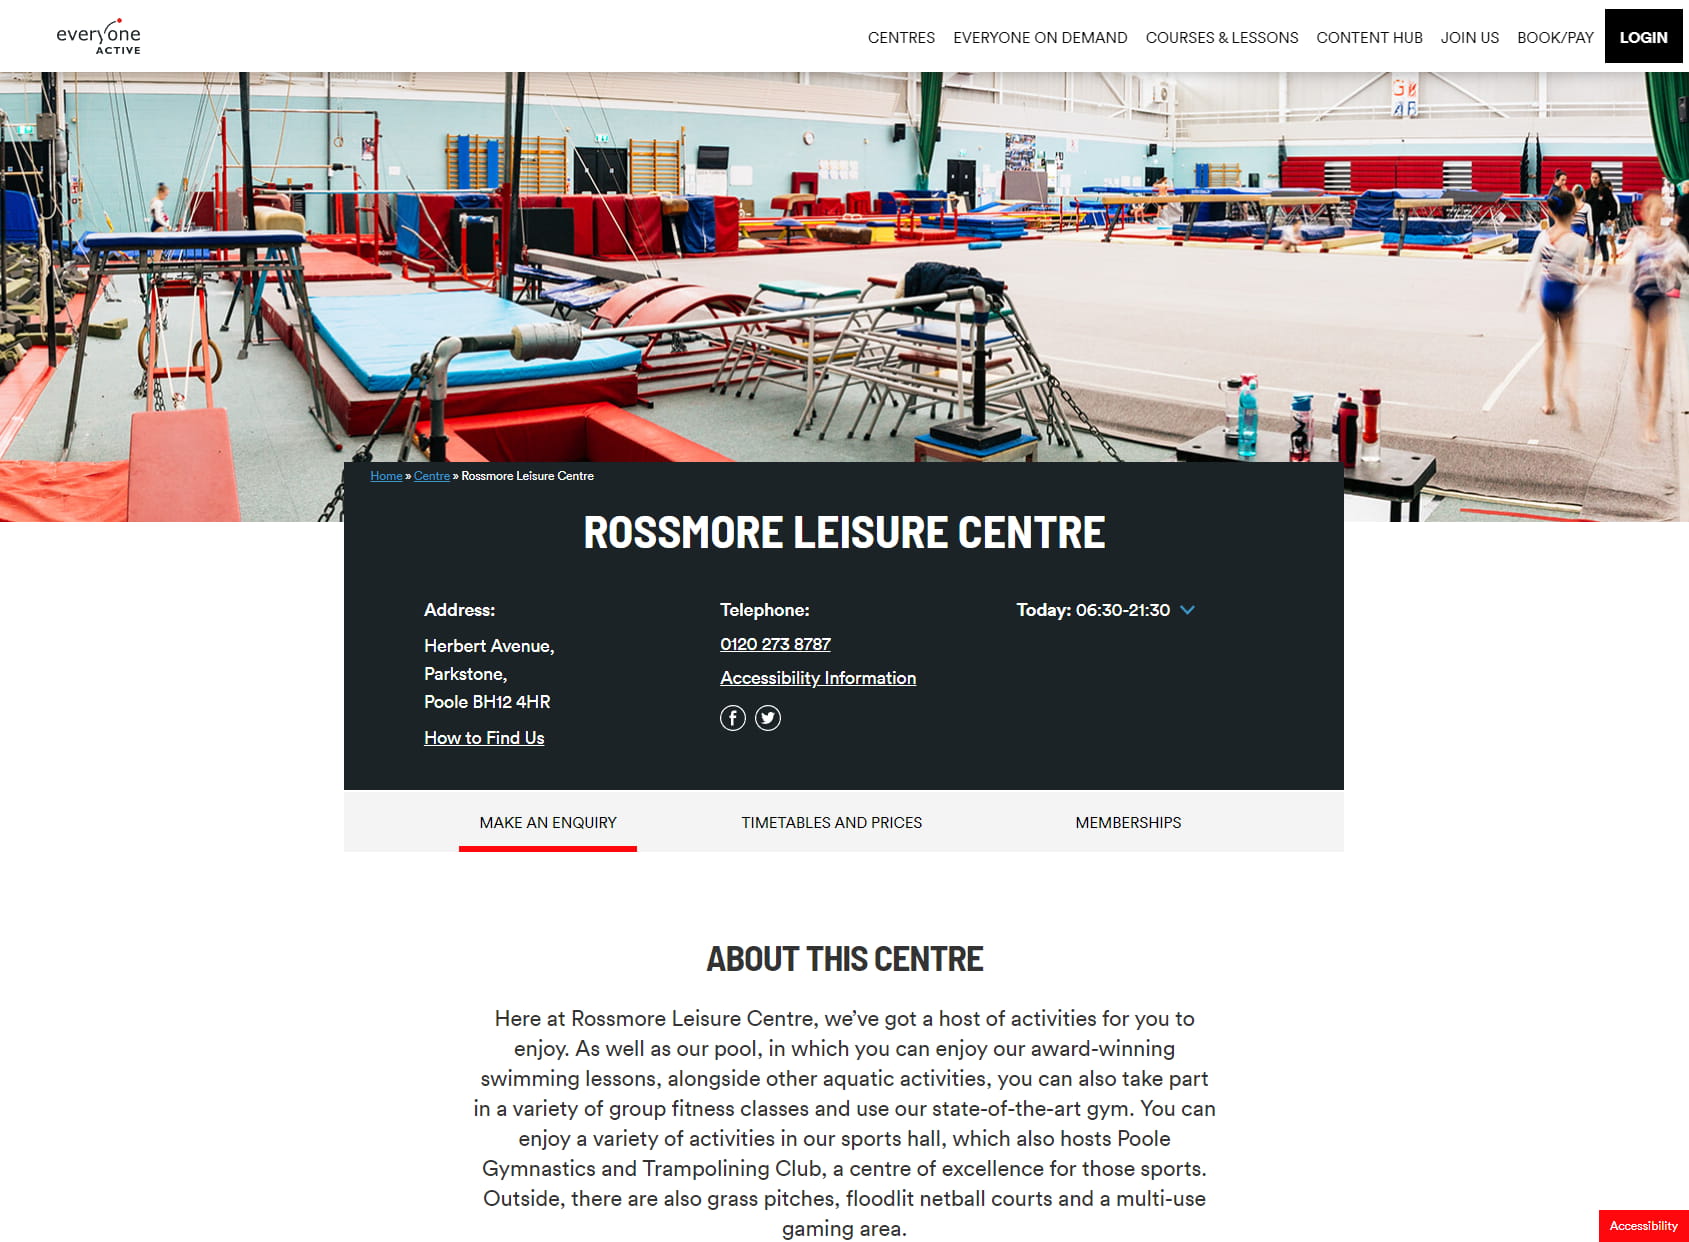 Rossmore Leisure Centre